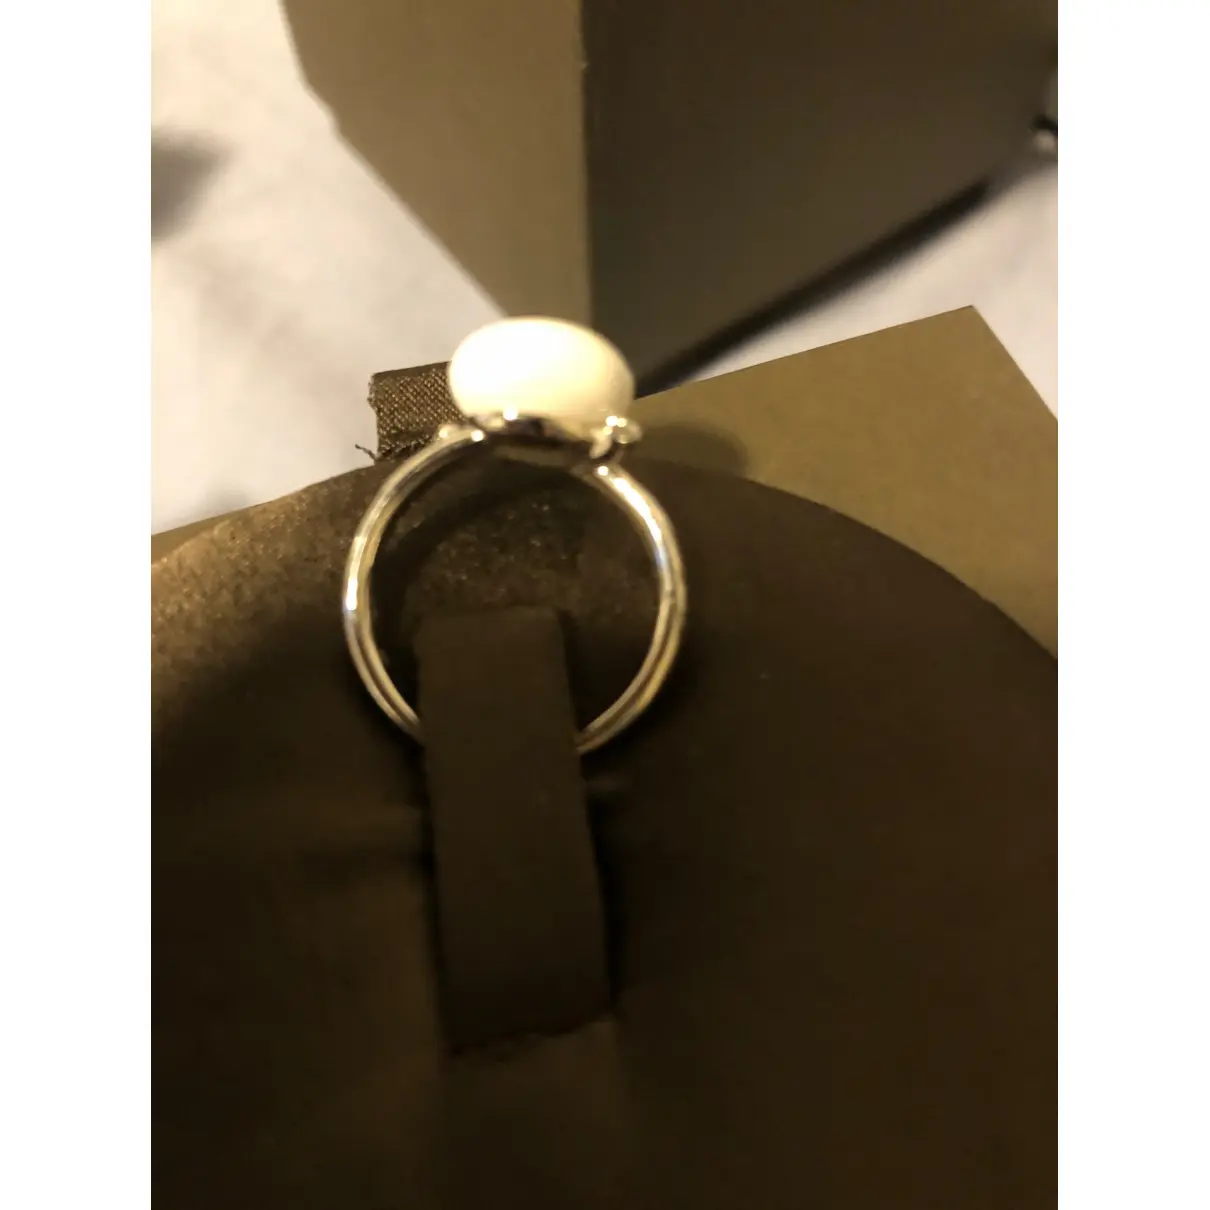 Buy Pomellato Capri white gold ring online